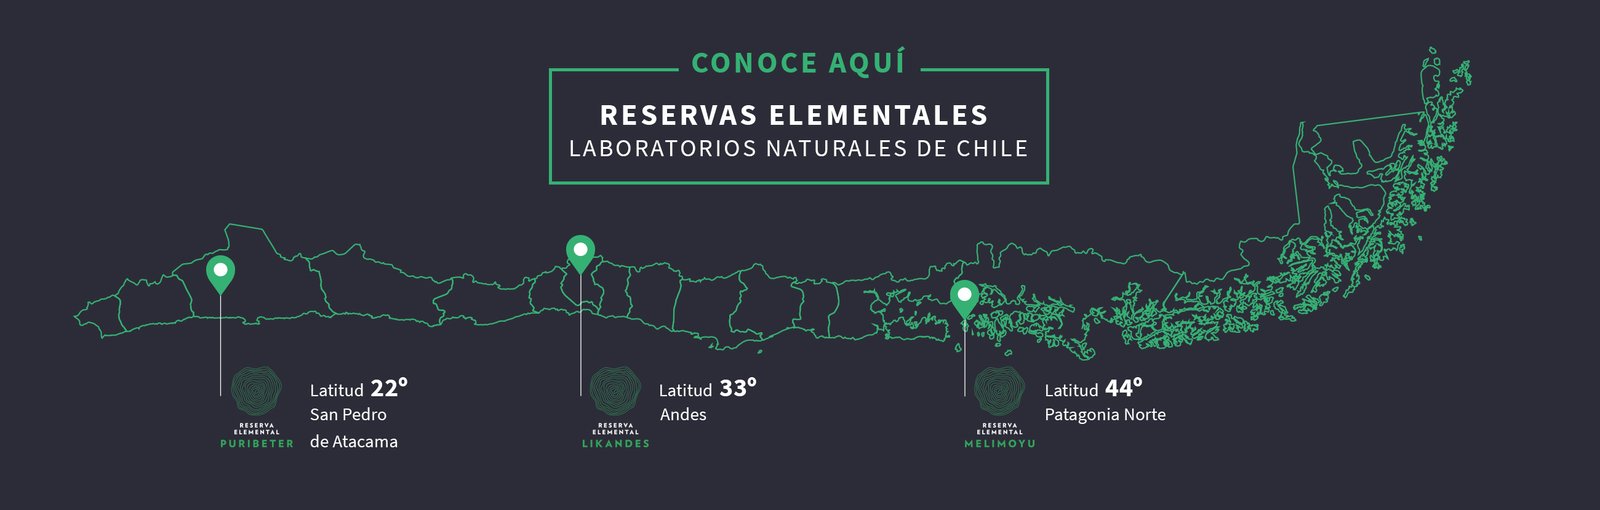 reservas-elementales-laboratorios-naturales-de-chile